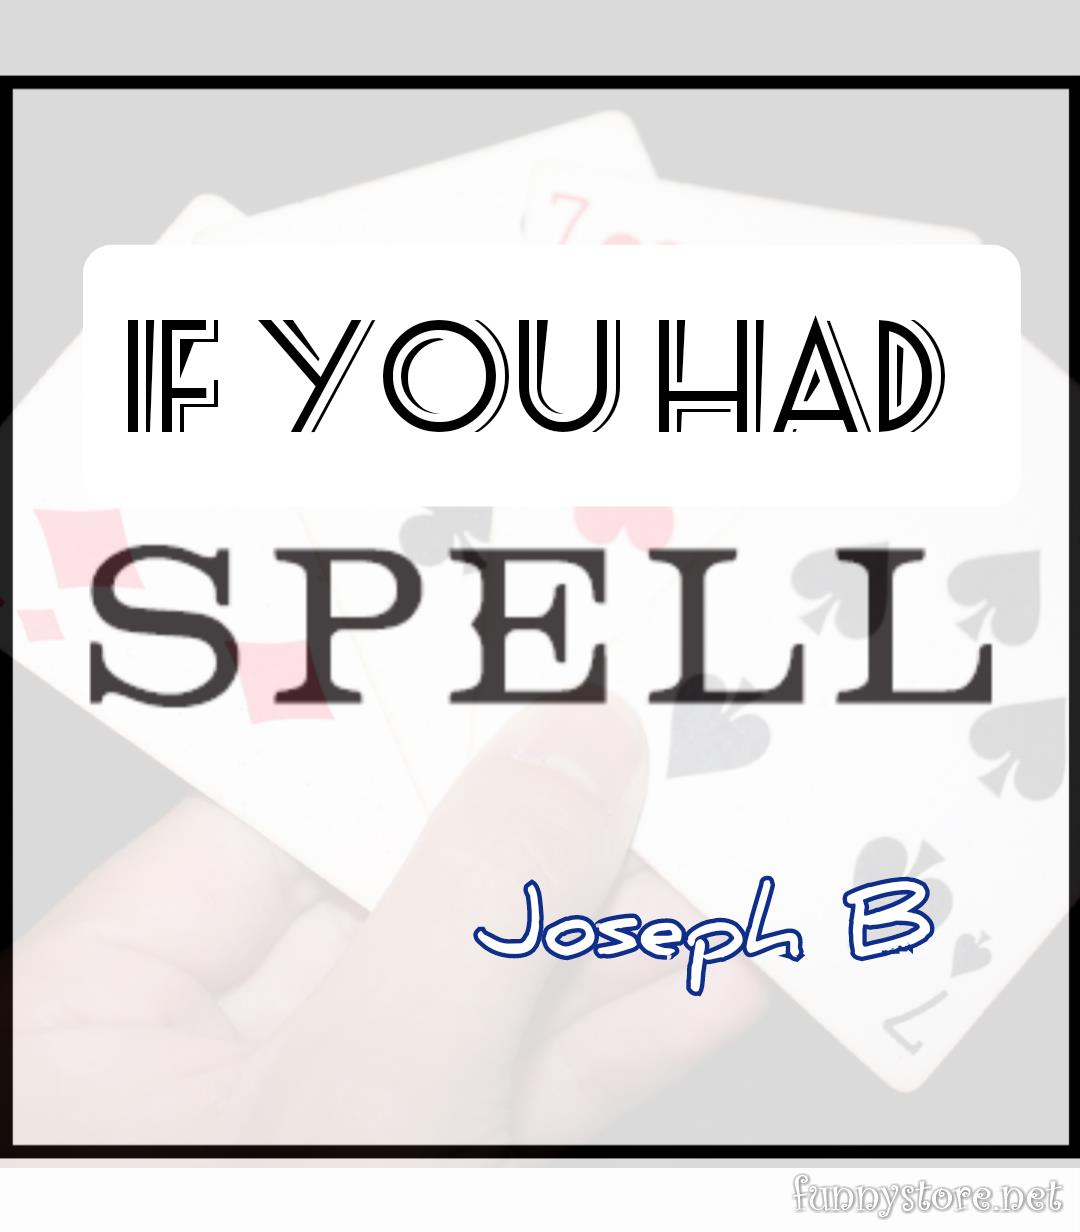 Joseph B. - IF YOU HAD SPELL